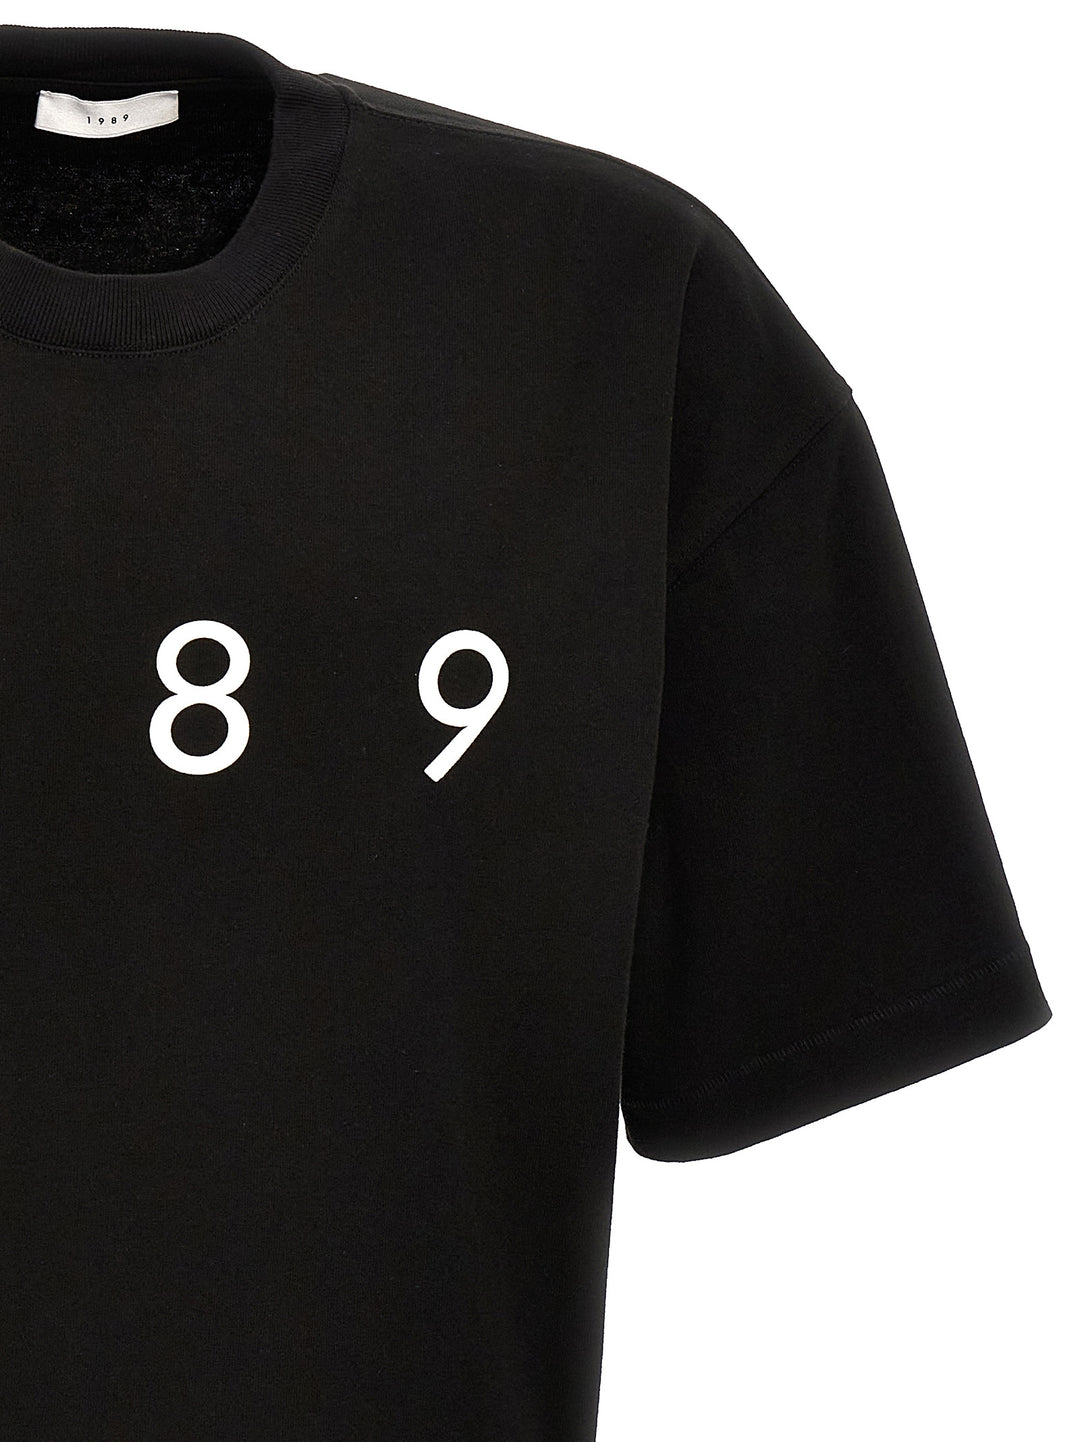 1989 Logo T Shirt Nero